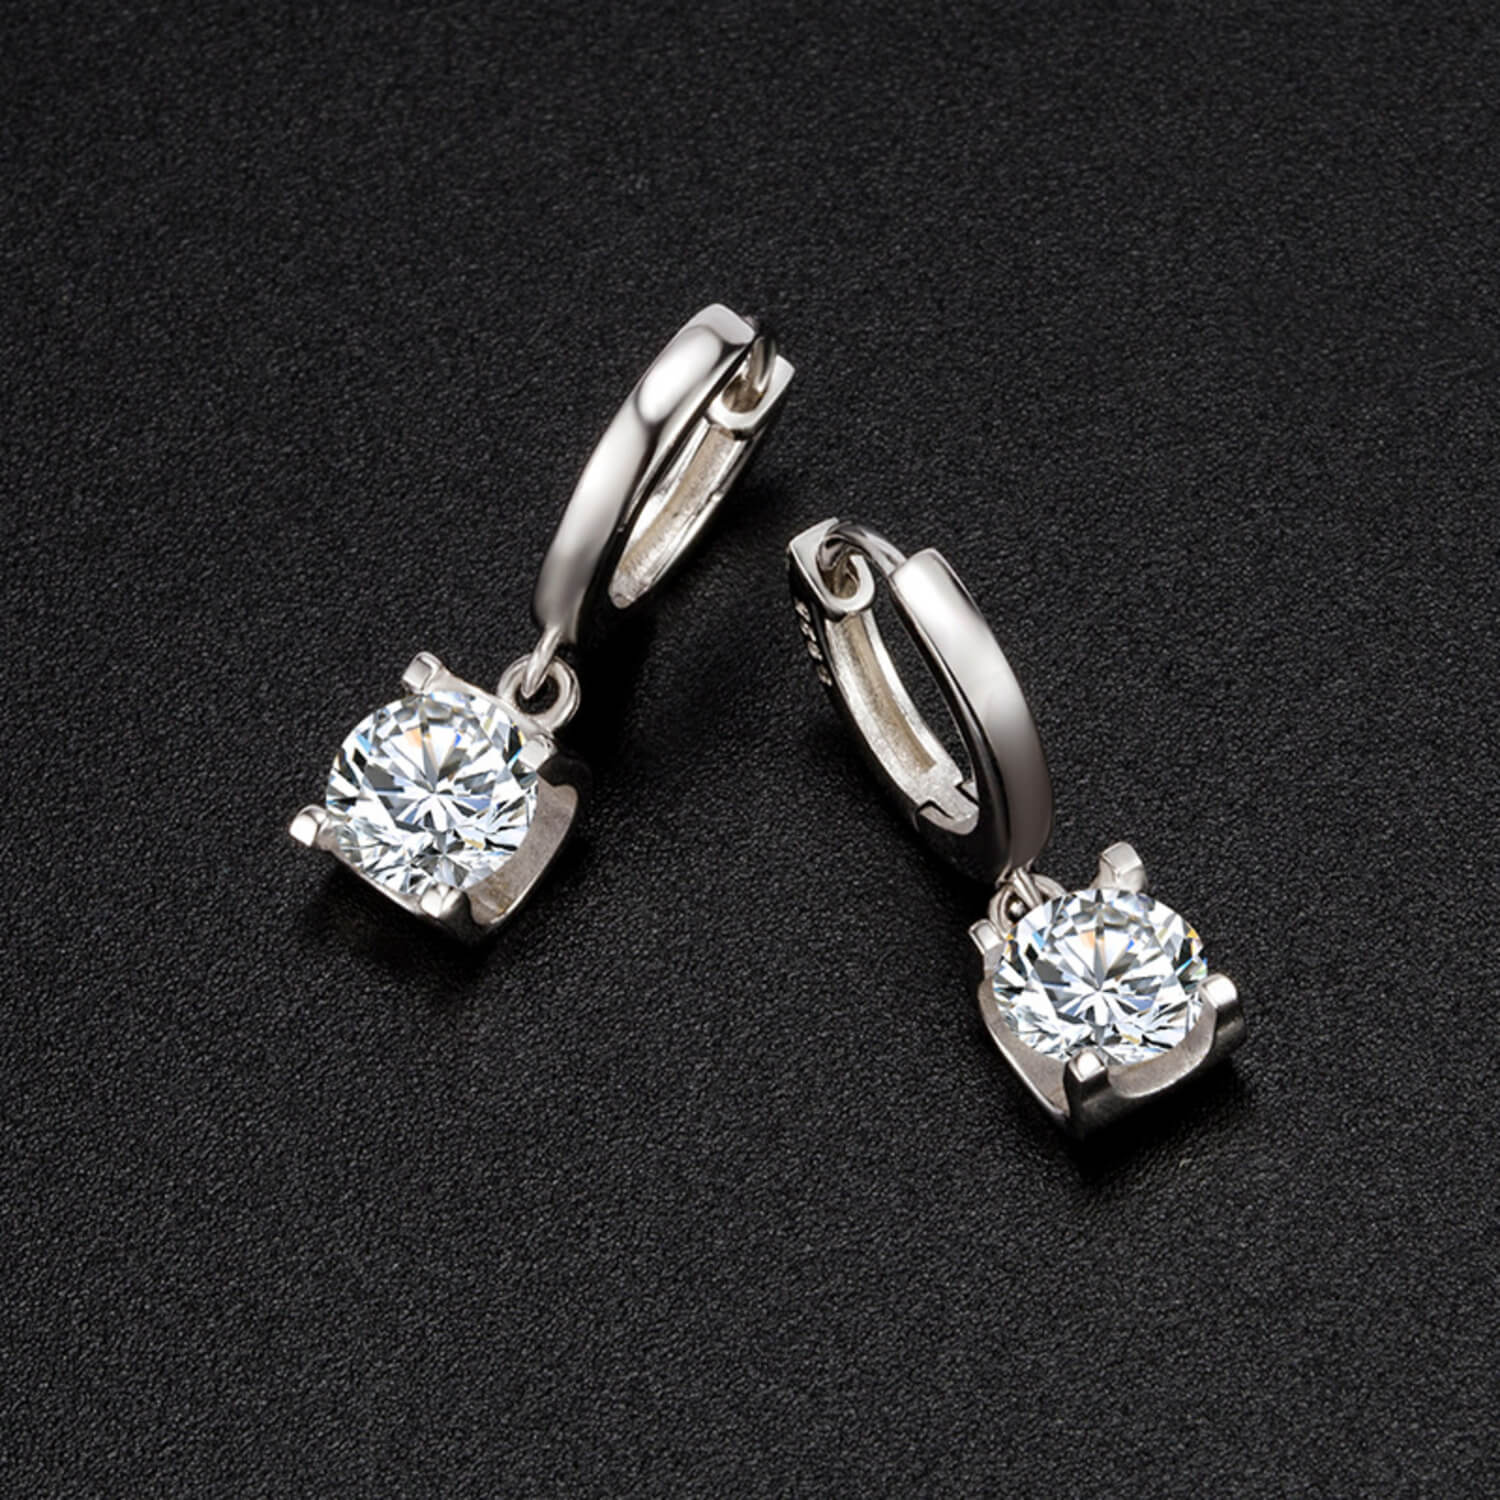 Cut Simulated Moissanite Diamond Gemstone Dangle Drop Earrings for Women Wedding Gifts